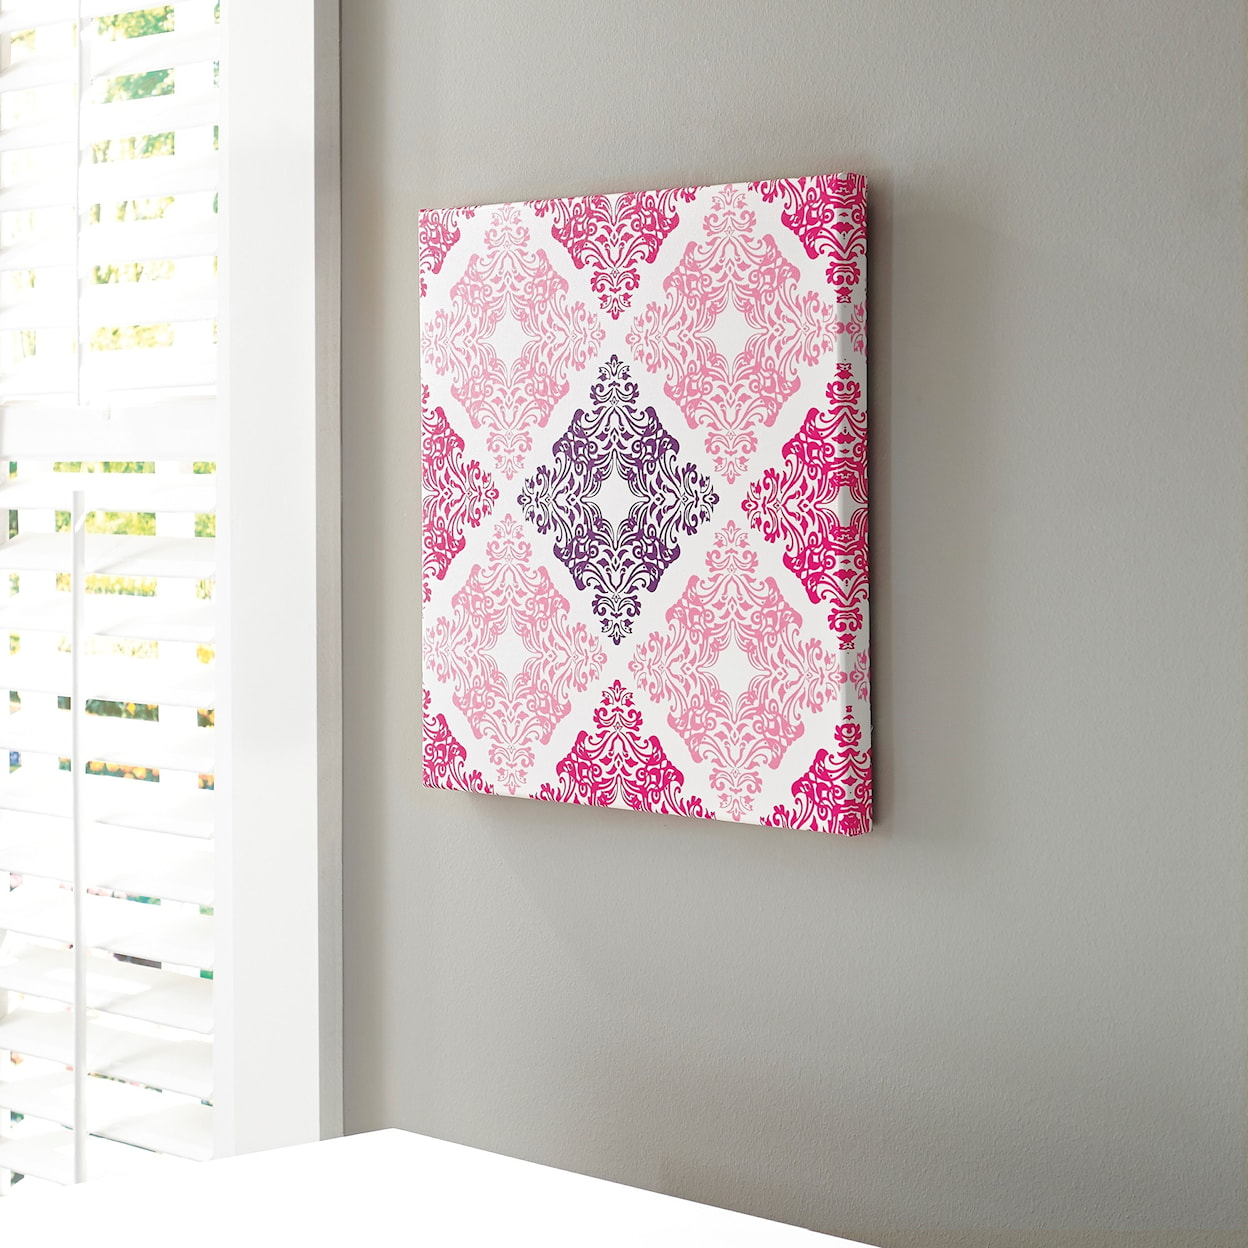 Ashley Furniture Signature Design Wall Art Jadine White/Pink Wall Art